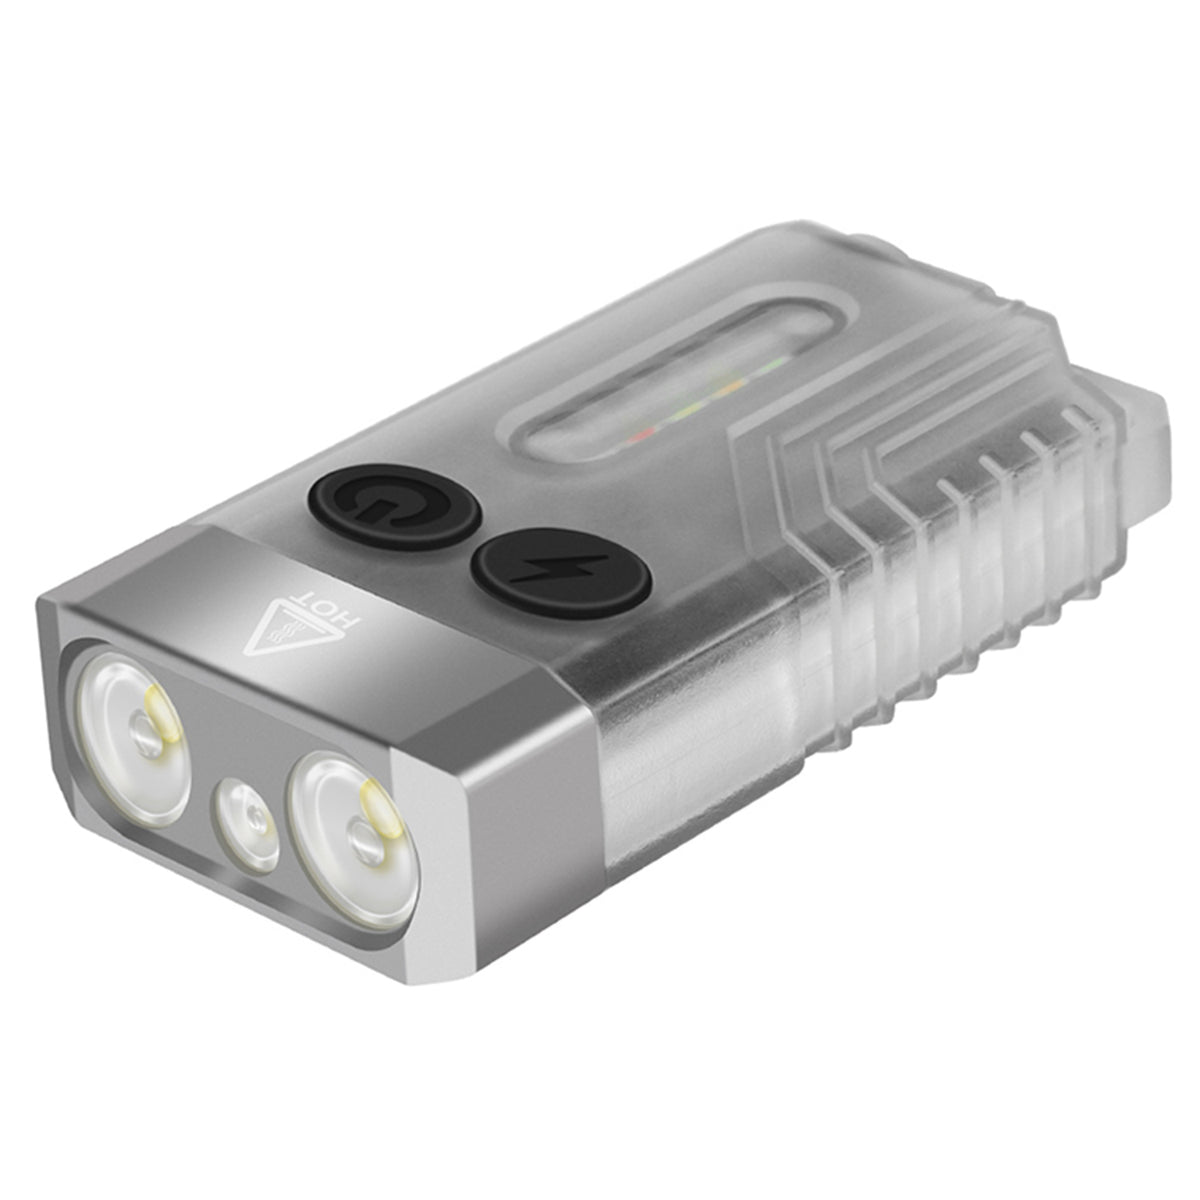 New UltraFire V10  High-Performance Work Light EDC Portable Multi-Function Flashlight